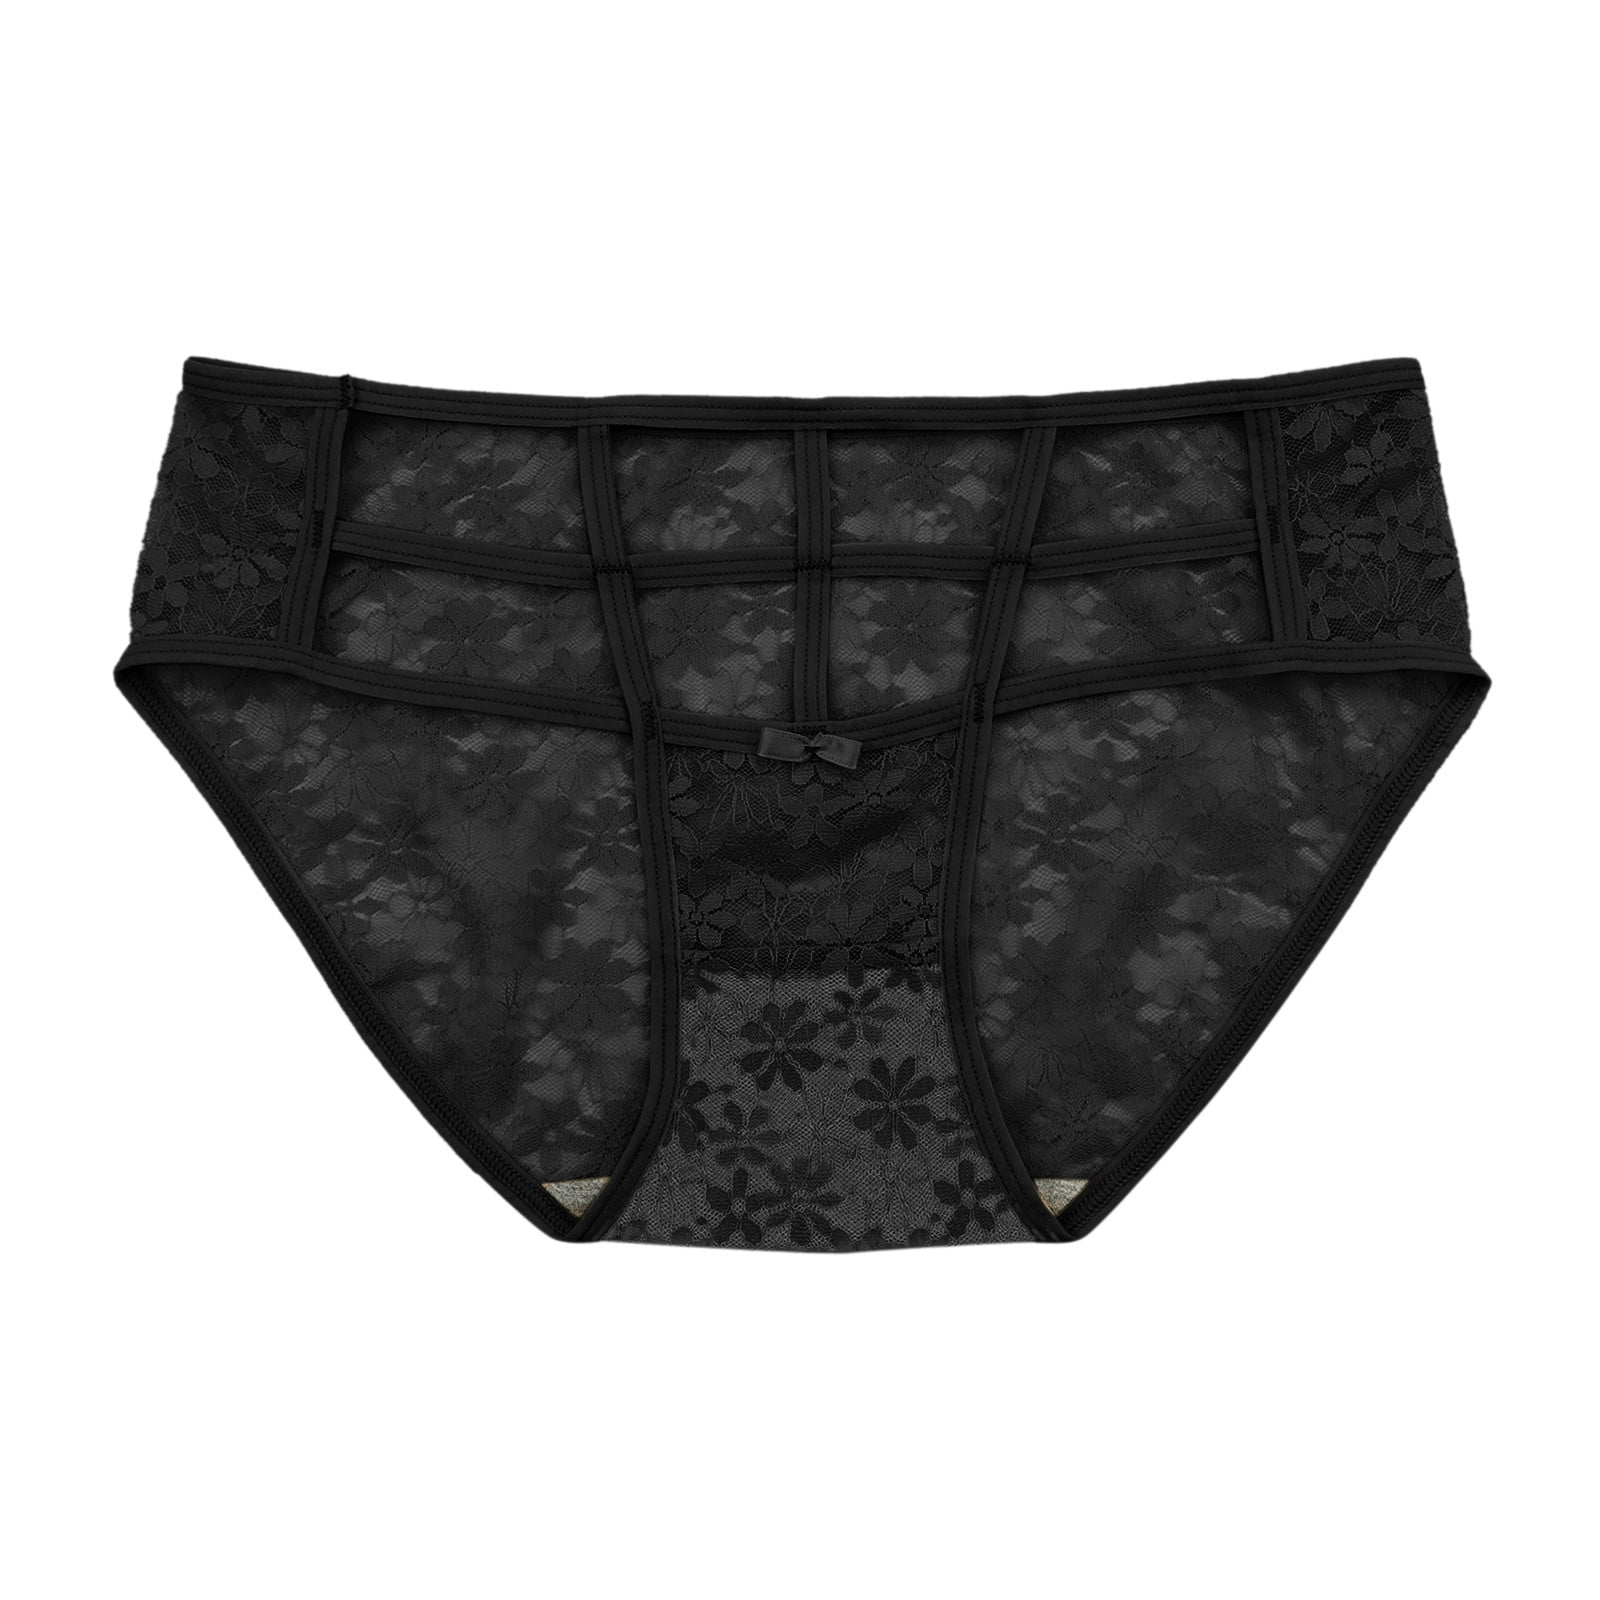 JDEFEG Lace Panties For Women Women Lace Underwear Breathable